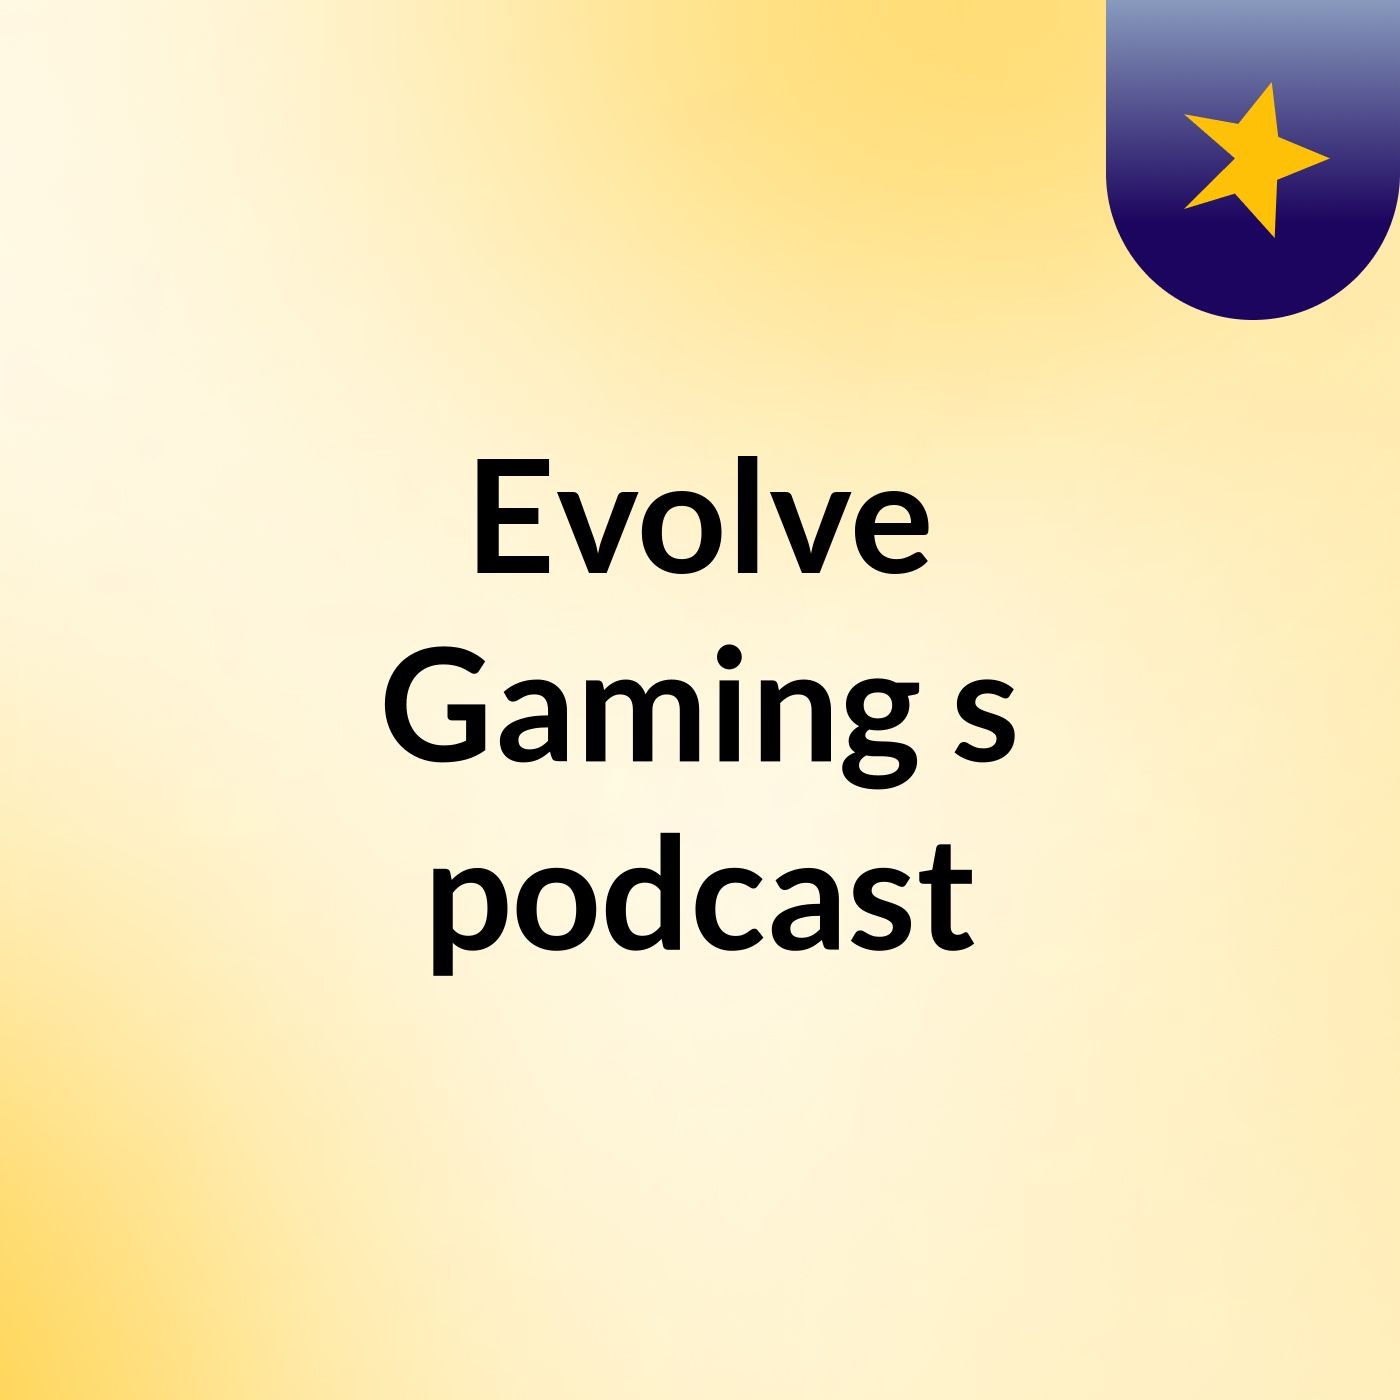 Evolve Gaming's podcast